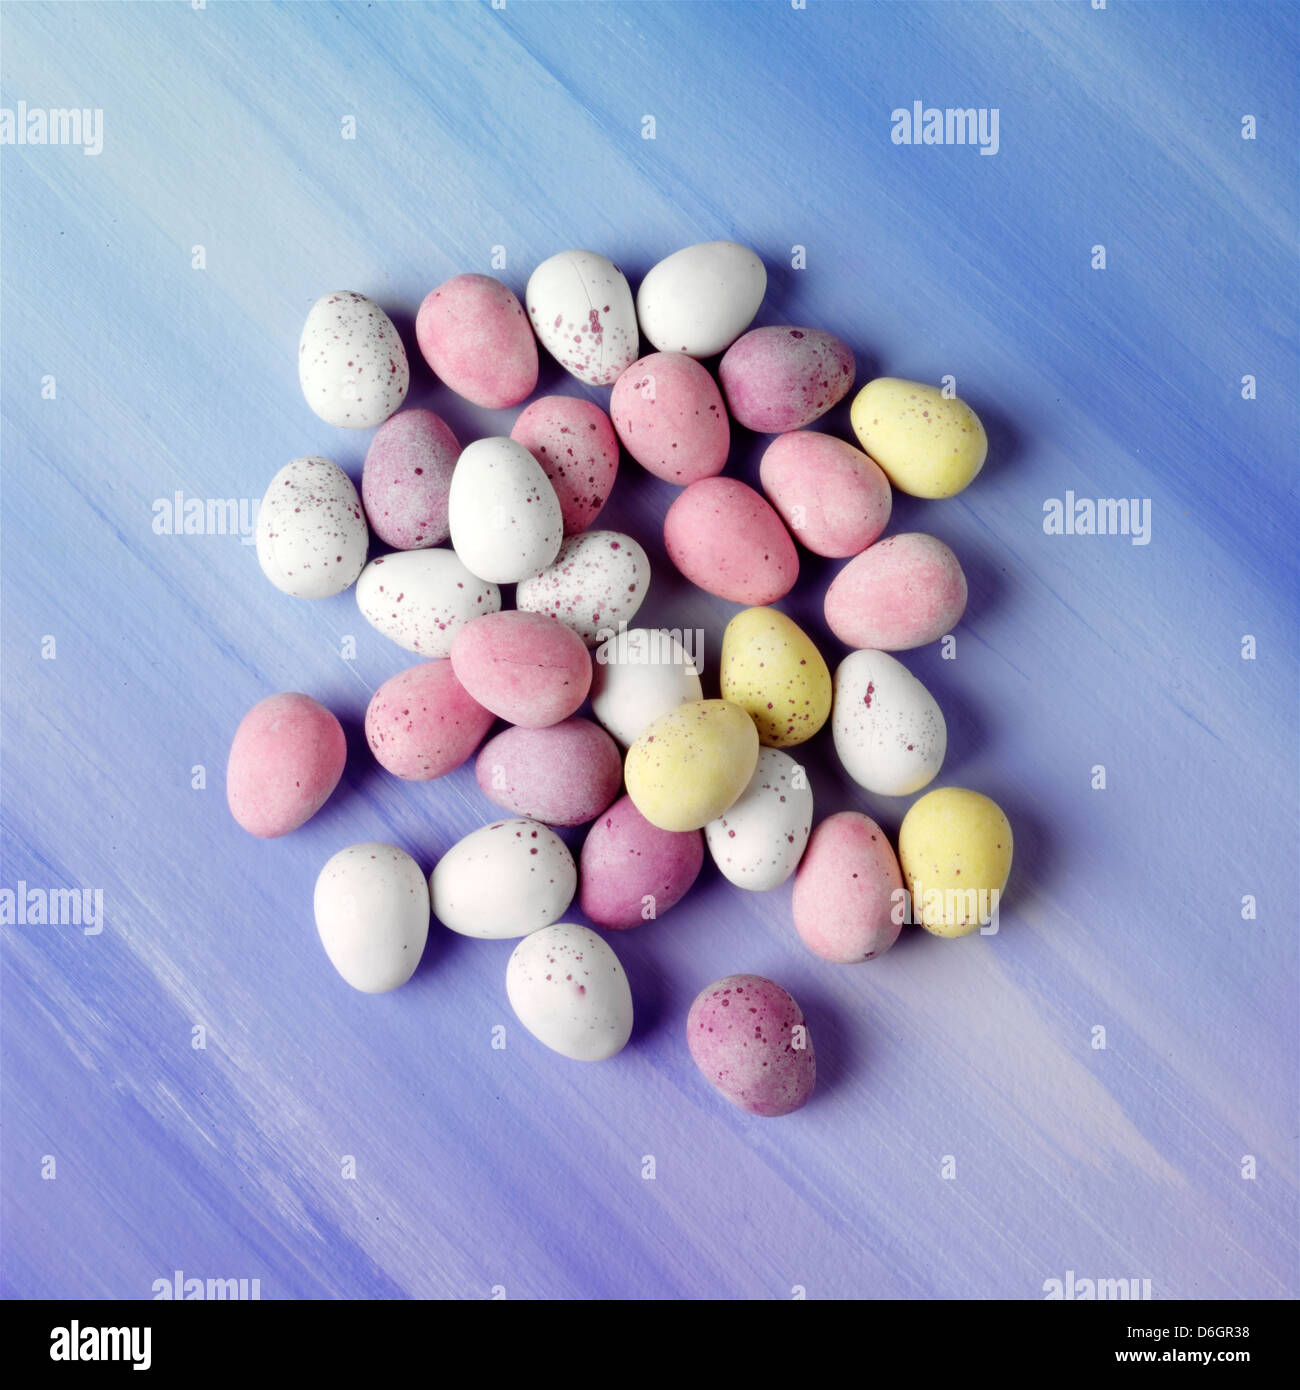 Chocolate mini eggs Stock Photo - Alamy